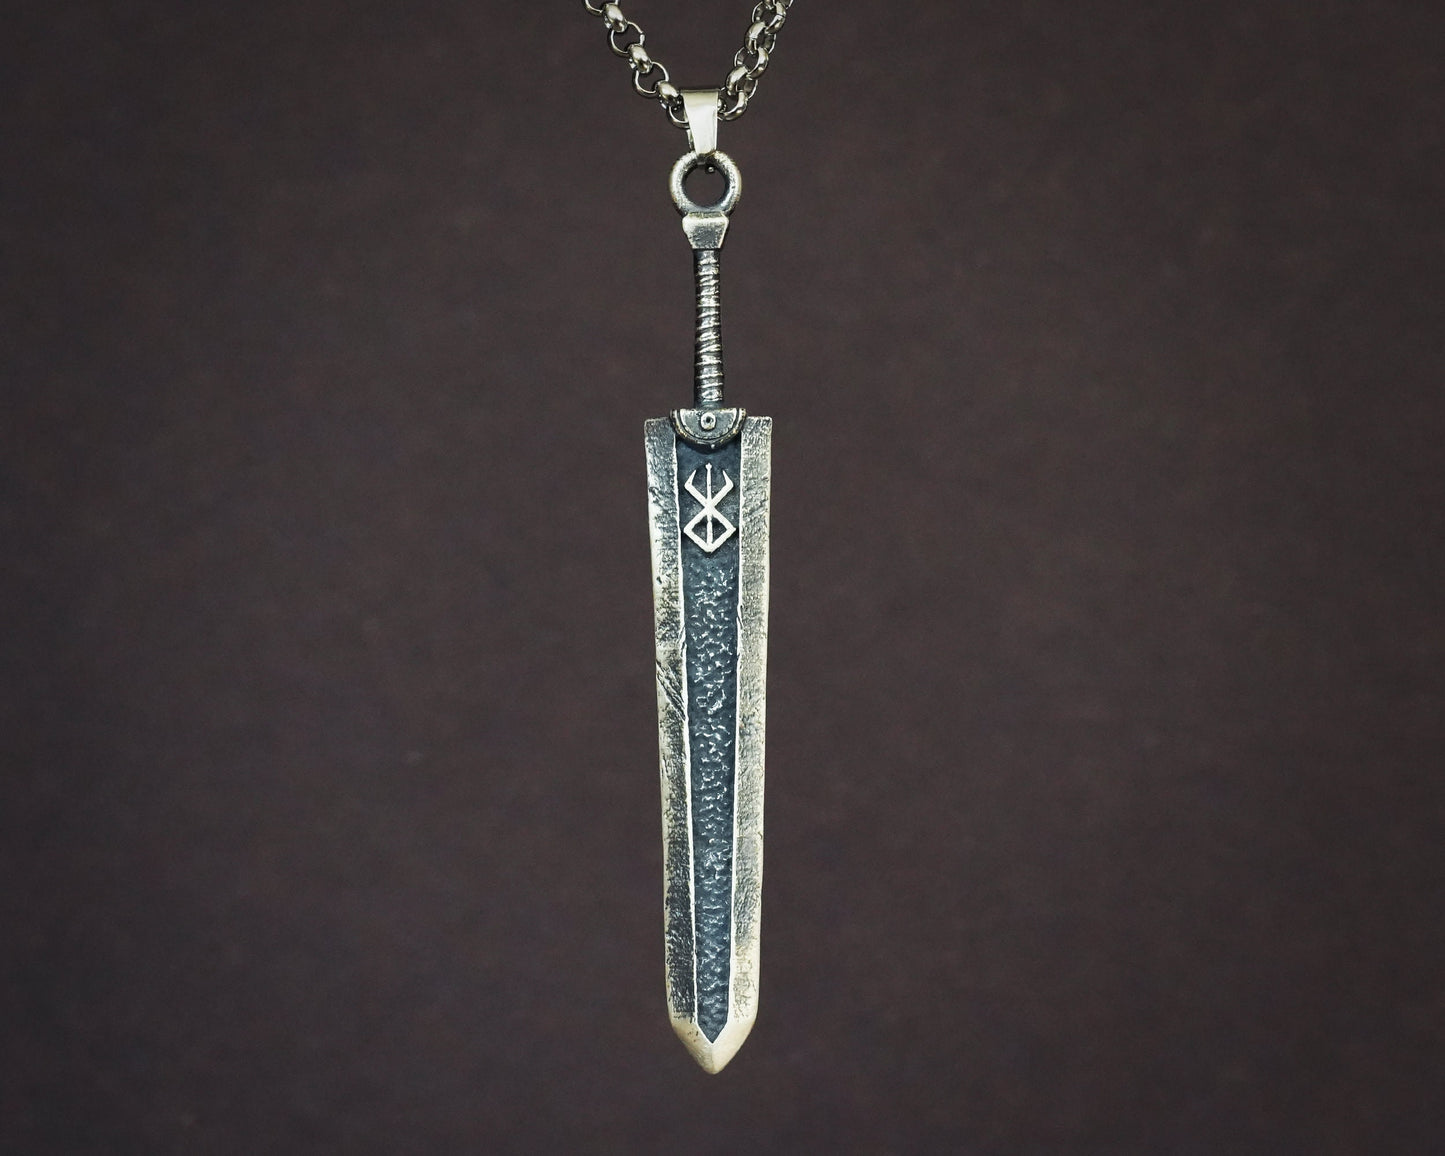 Brand of Sacrifice Dragon Slayer Sword Black Rune Anime Necklace Pendant Jewelry Fantasy Cosplay Gift for Men Women - Baldur Jewelry